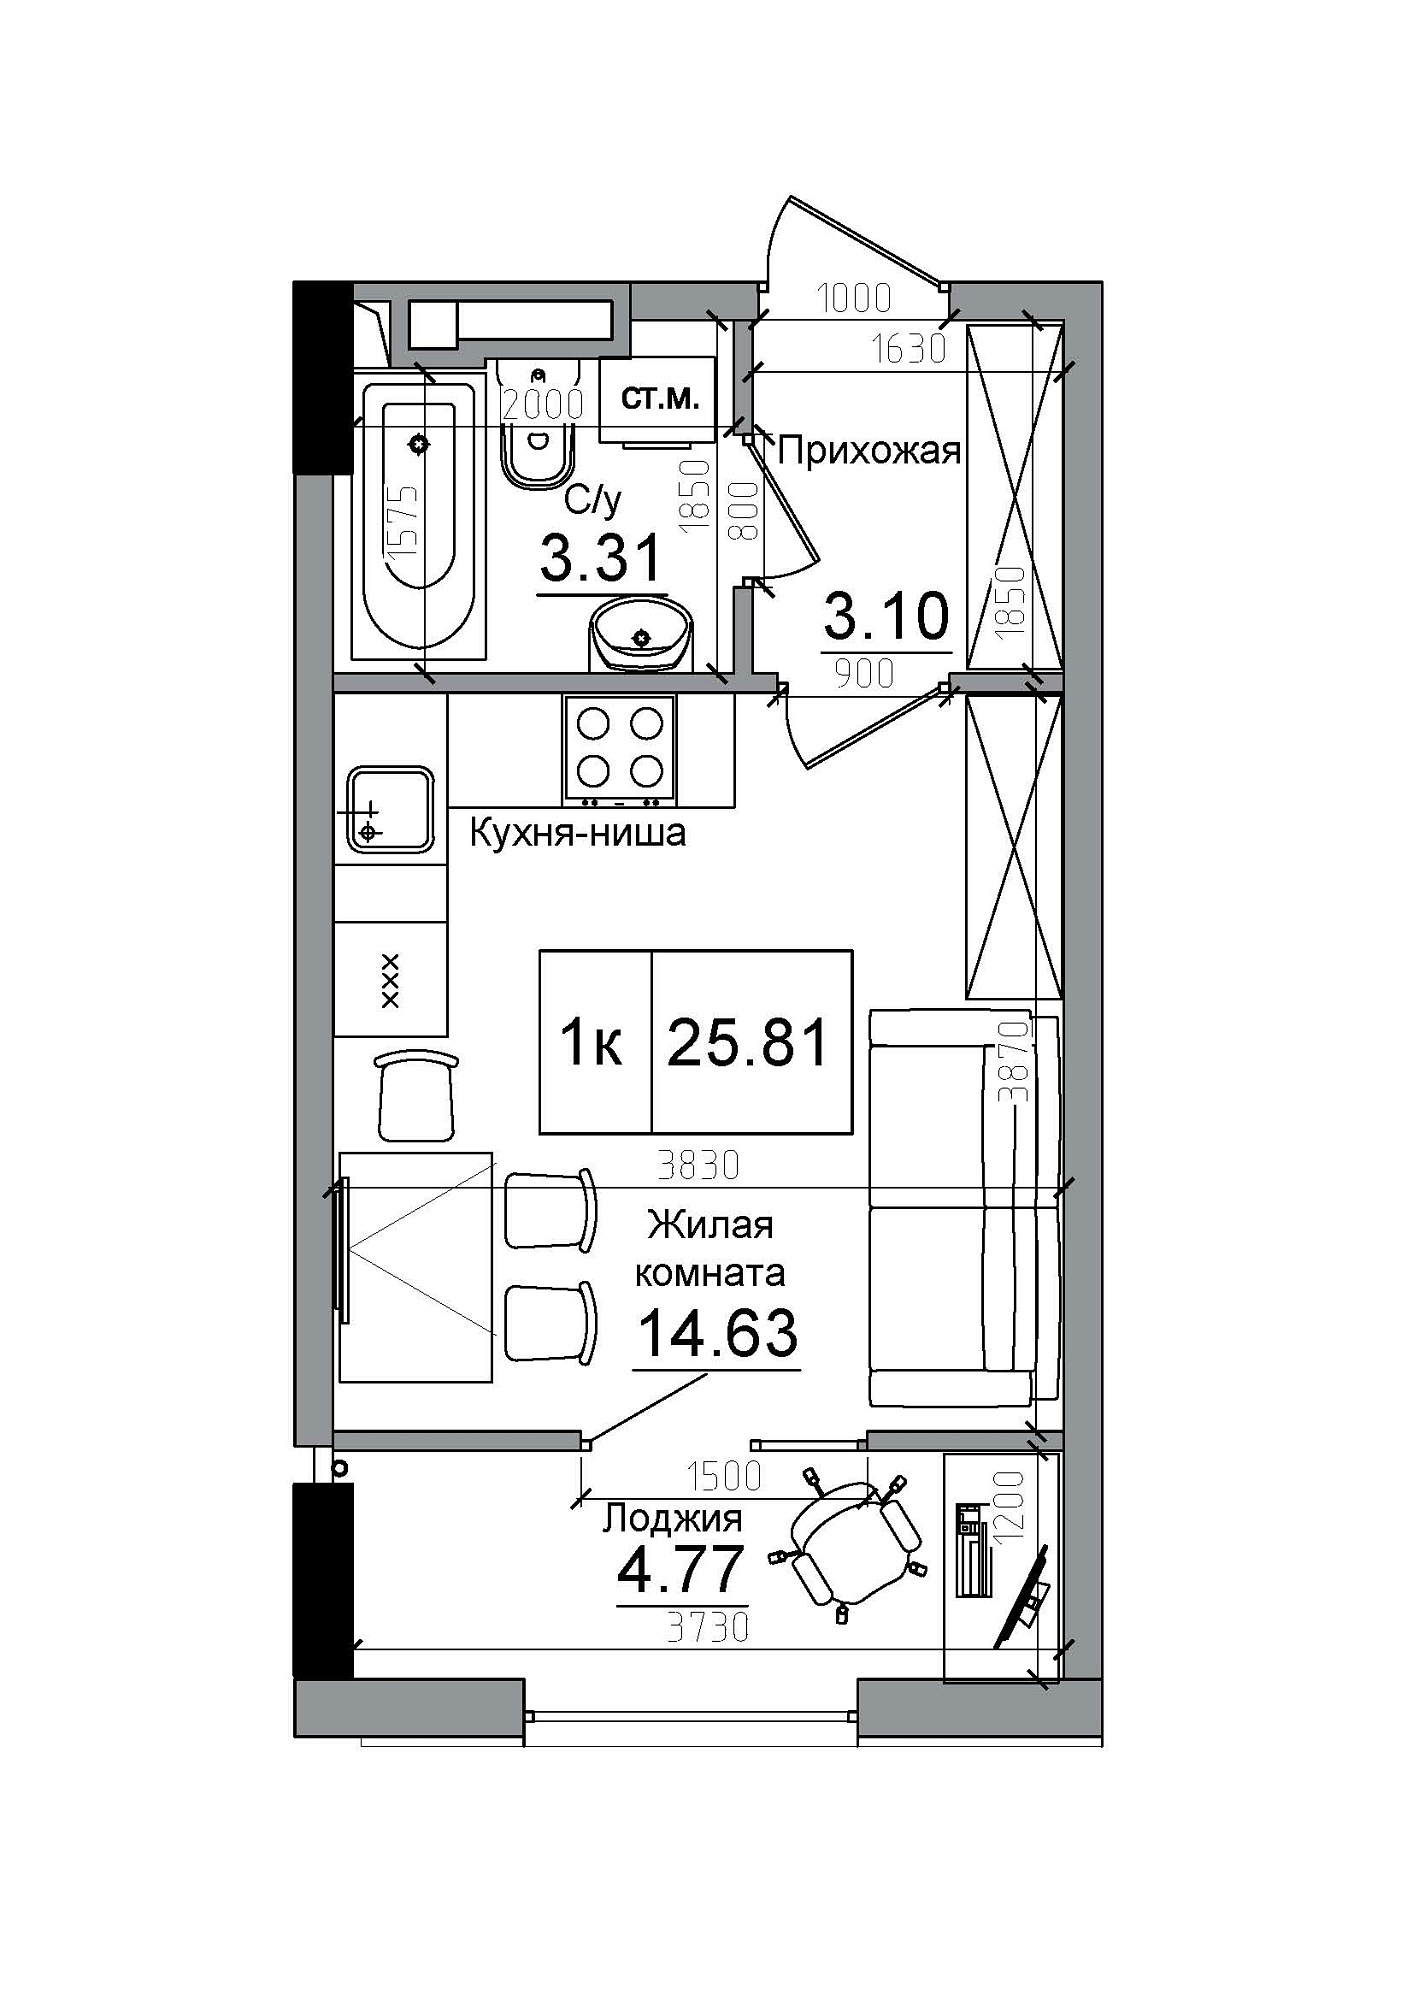 Planning Smart flats area 25.81m2, AB-12-10/00013.